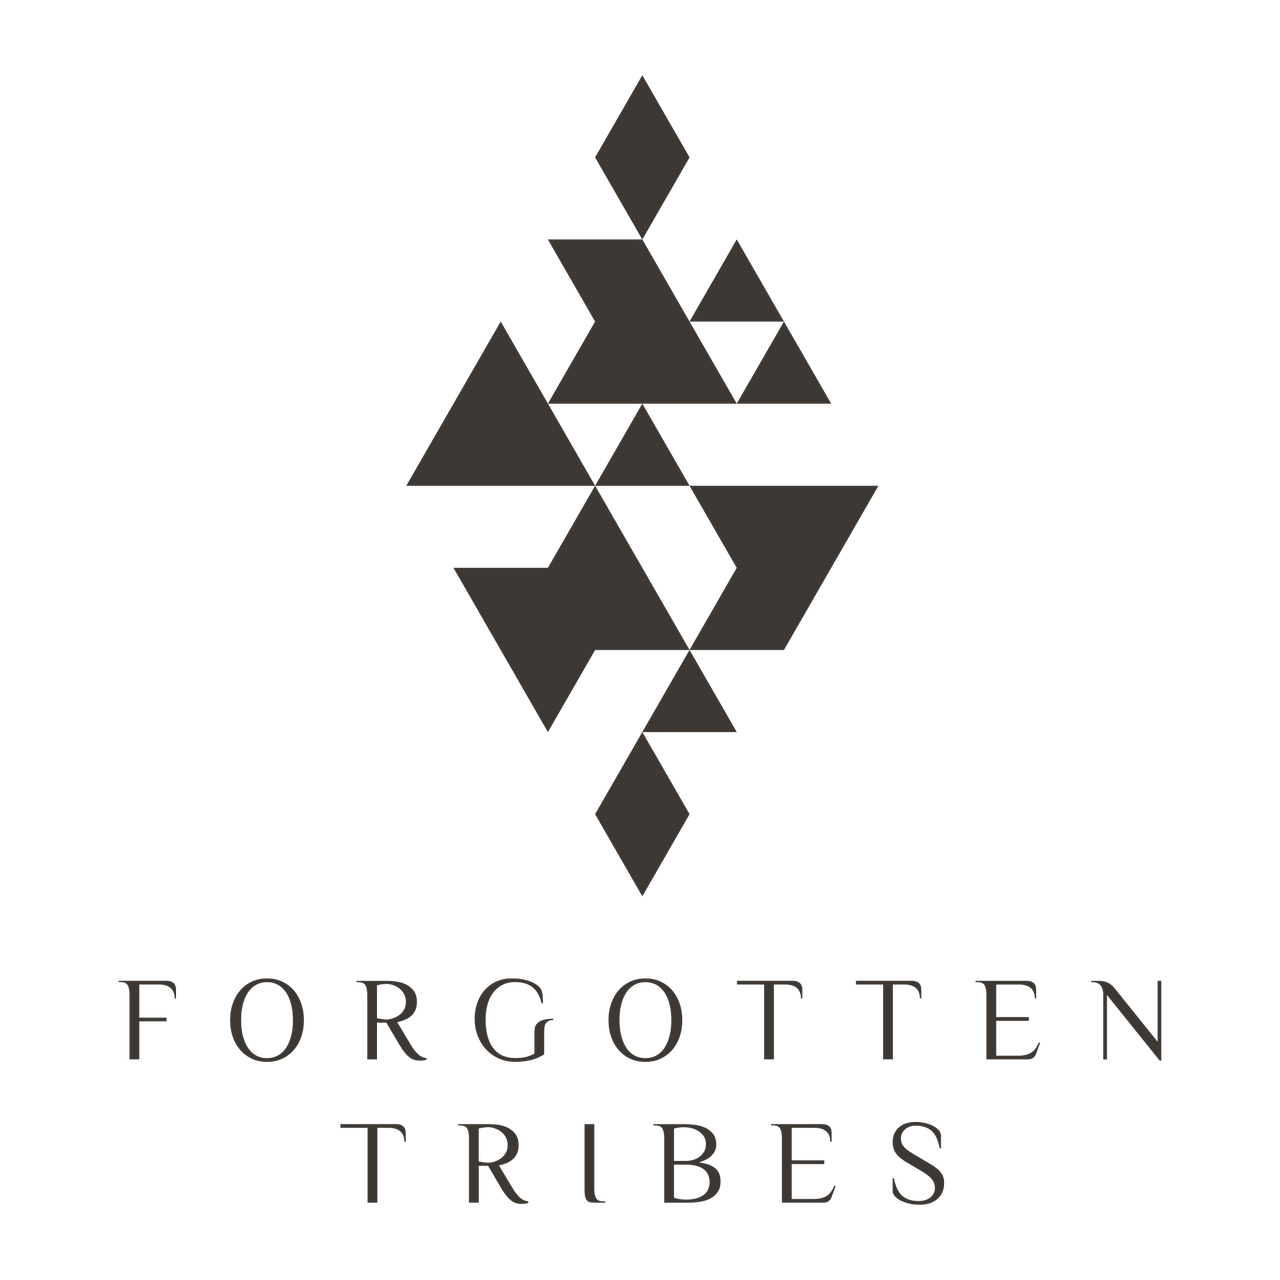 Forgotten Tribes